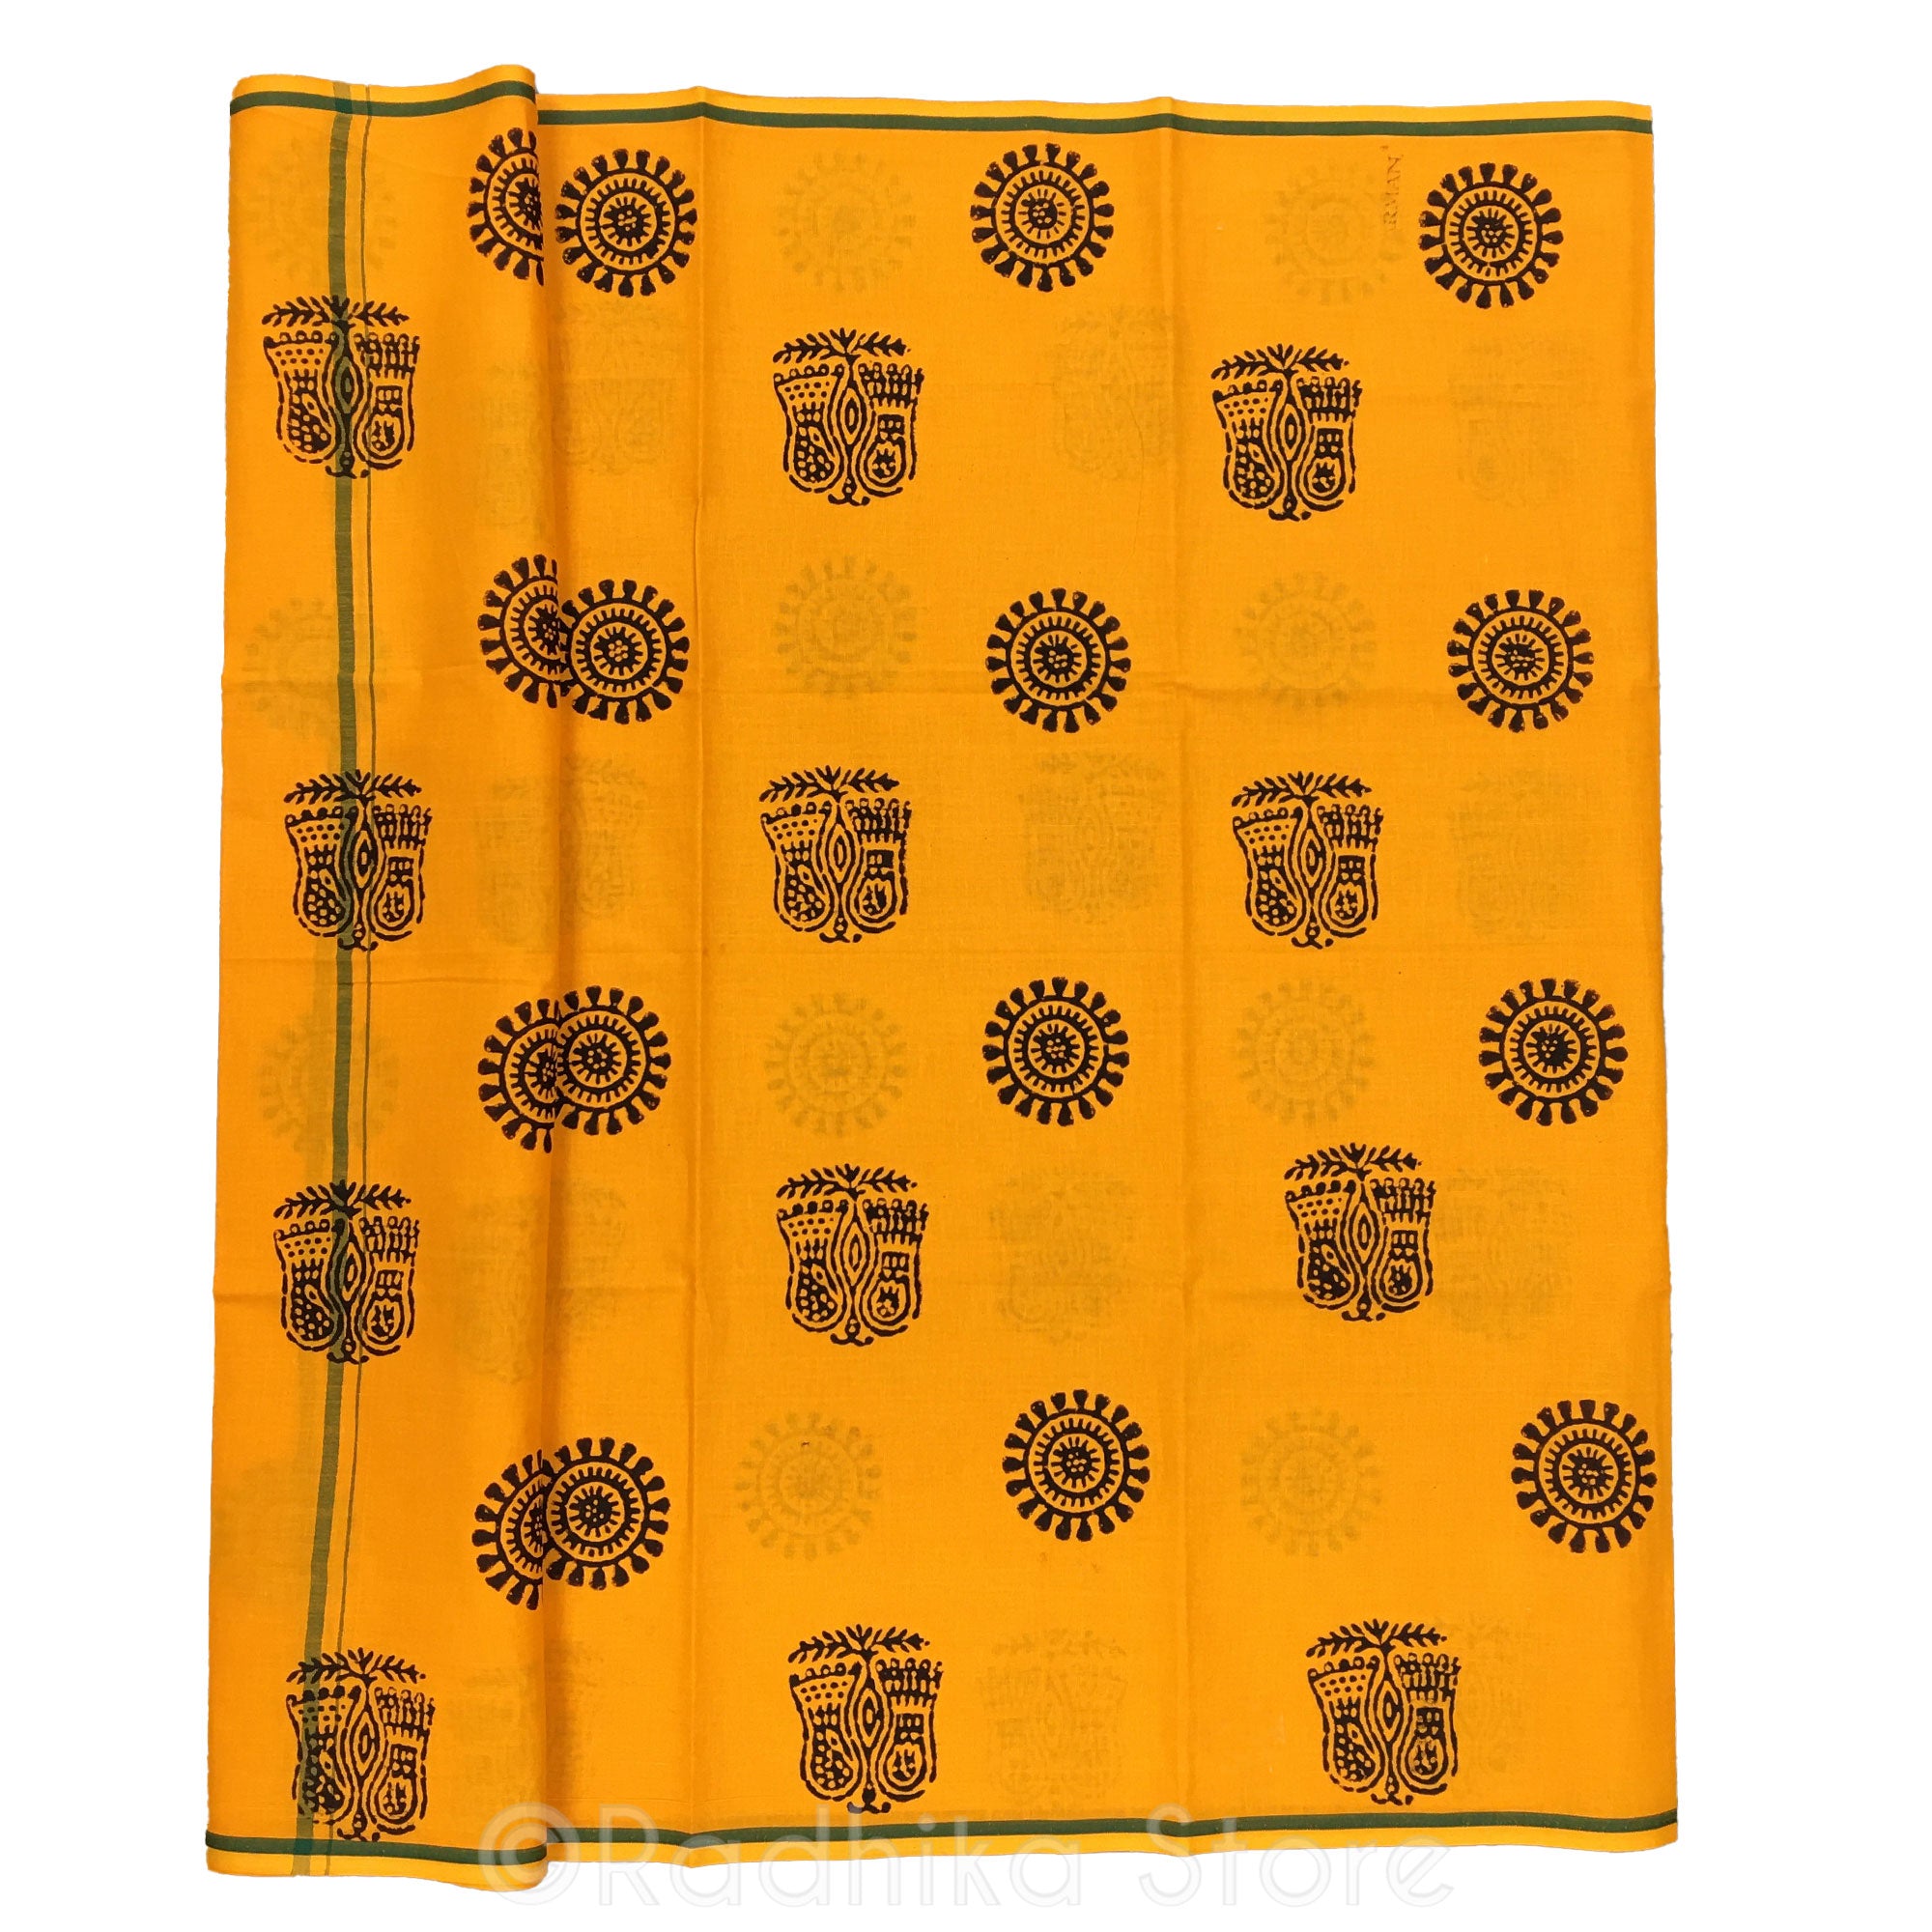 Marigold Orange Block Print Chadar - With Lotus Feet And Chakras